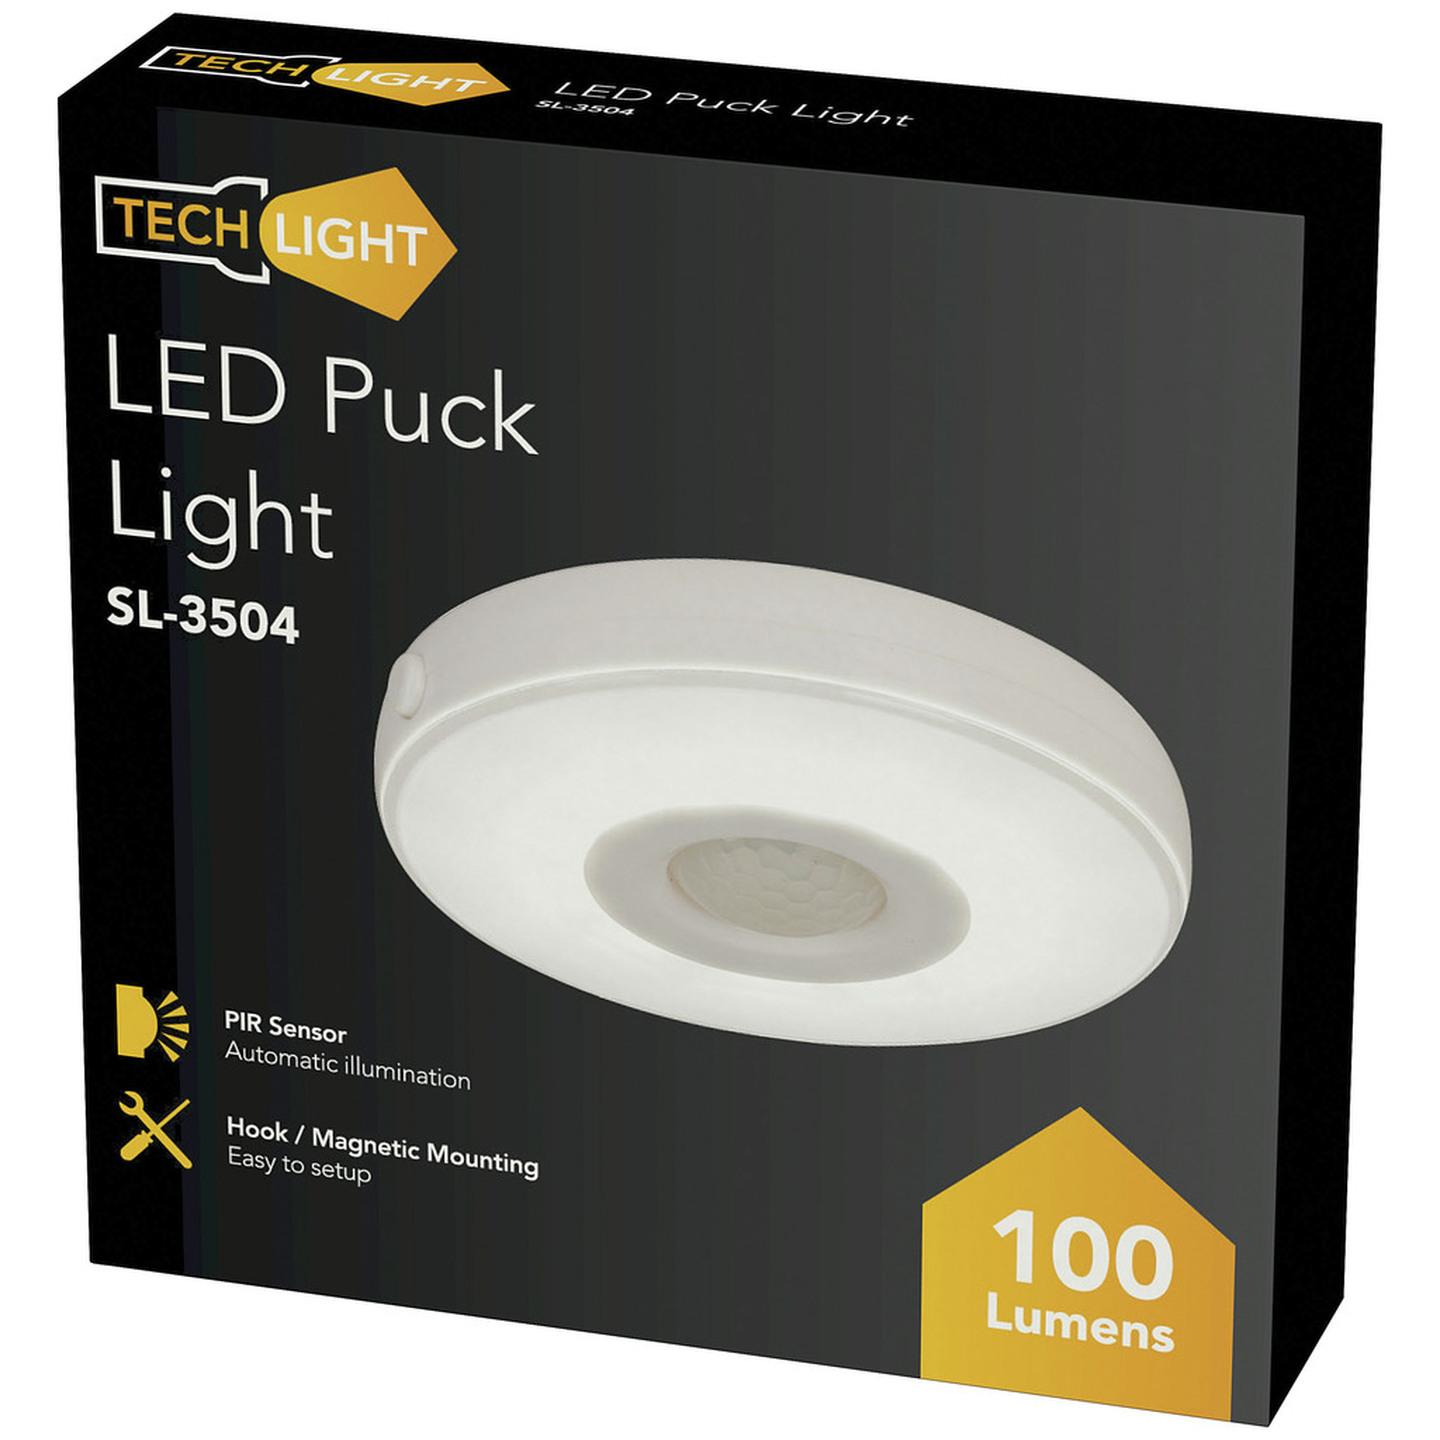 LED Puck Light with PIR